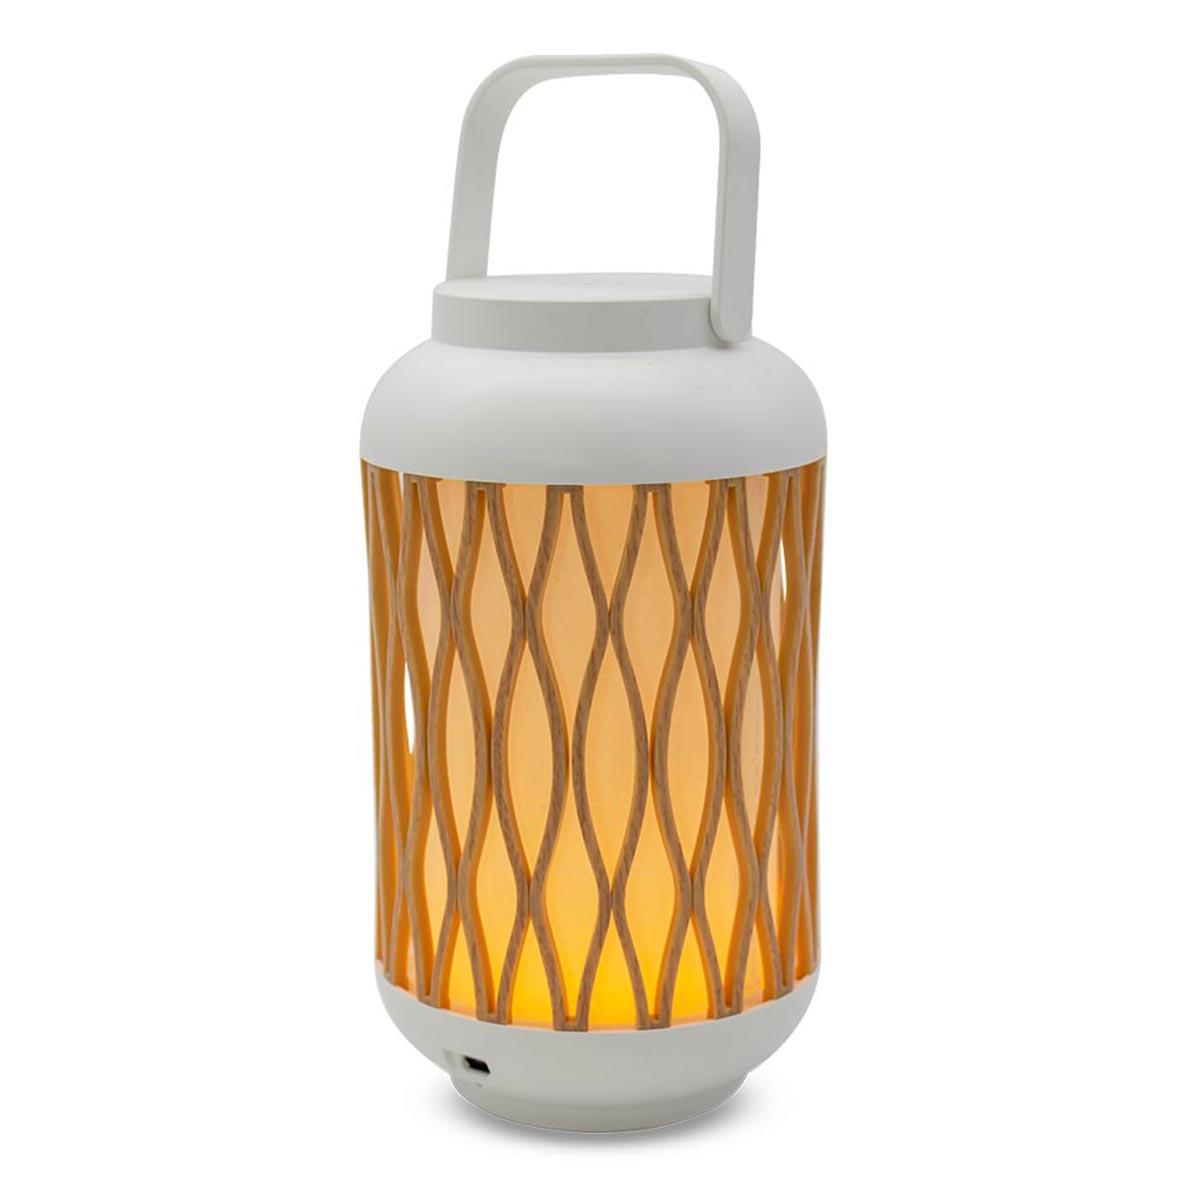 Lampe portable imitation bois effet flamme LED blanc chaud dimmable SUKY H23cm - REDDECO.com